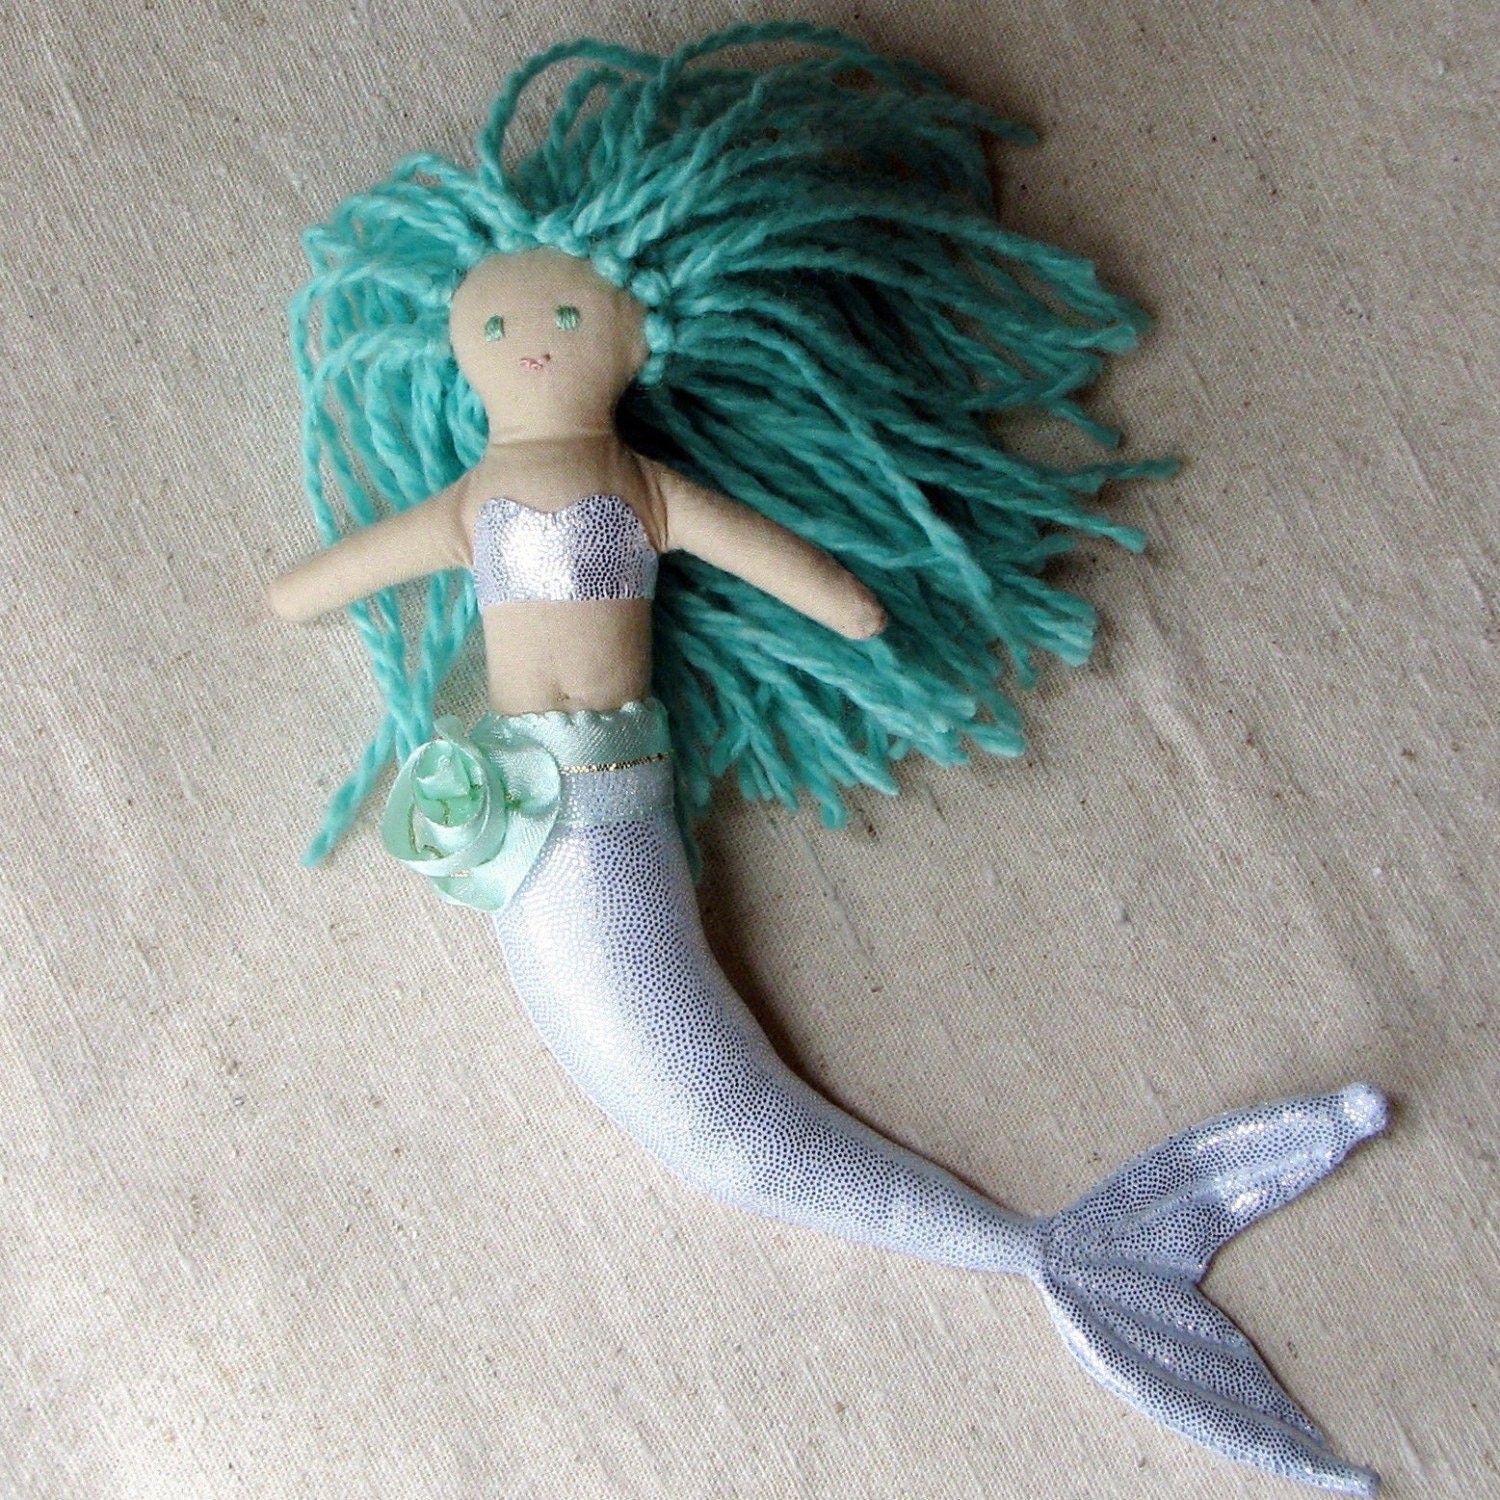 Mermaid cloth doll, sparkly silver with aqua green hair